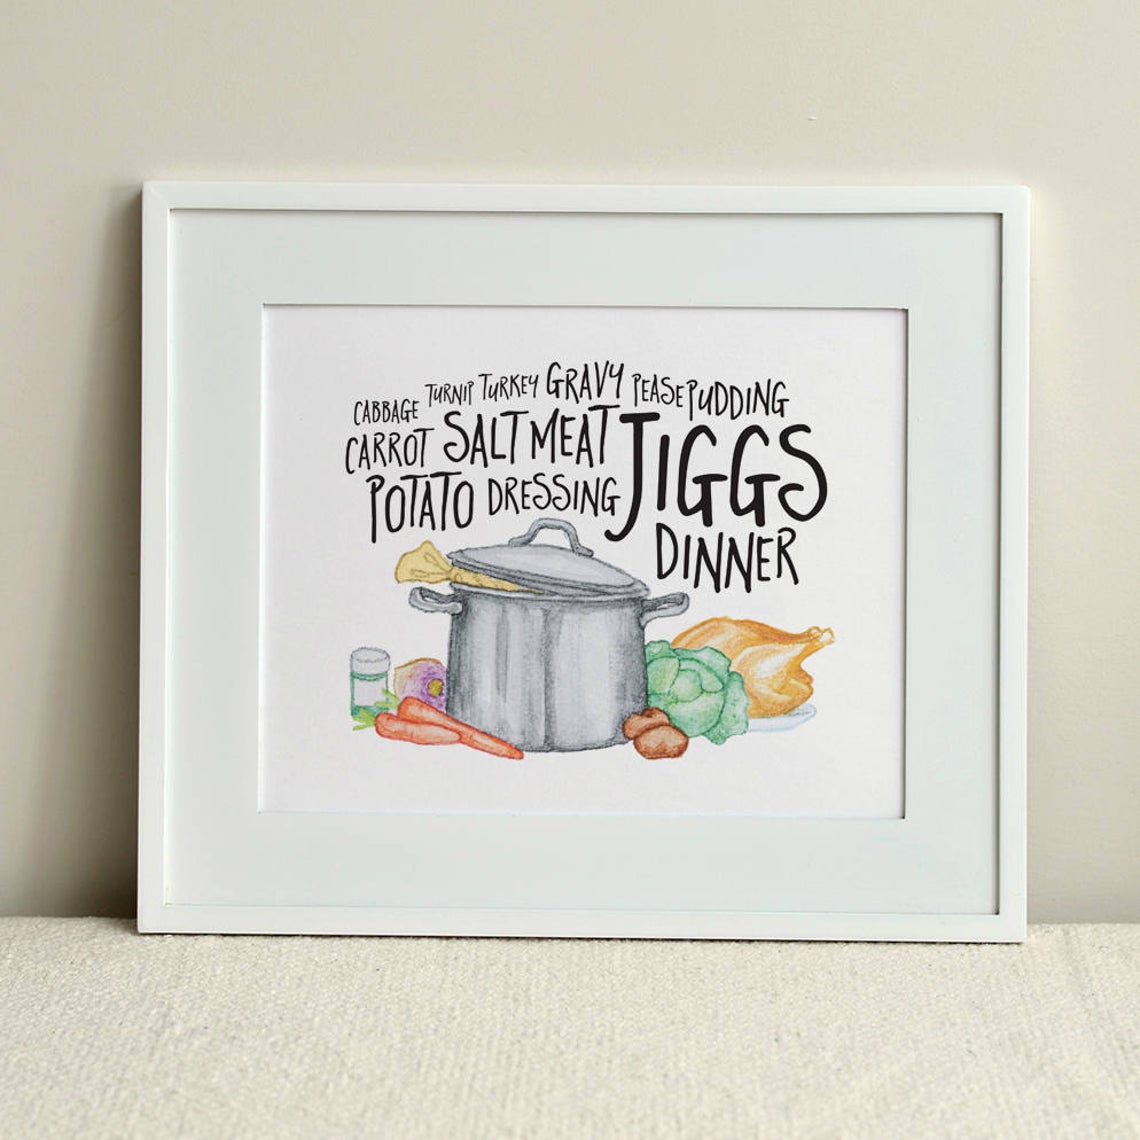 "Jiggs Dinner" Print